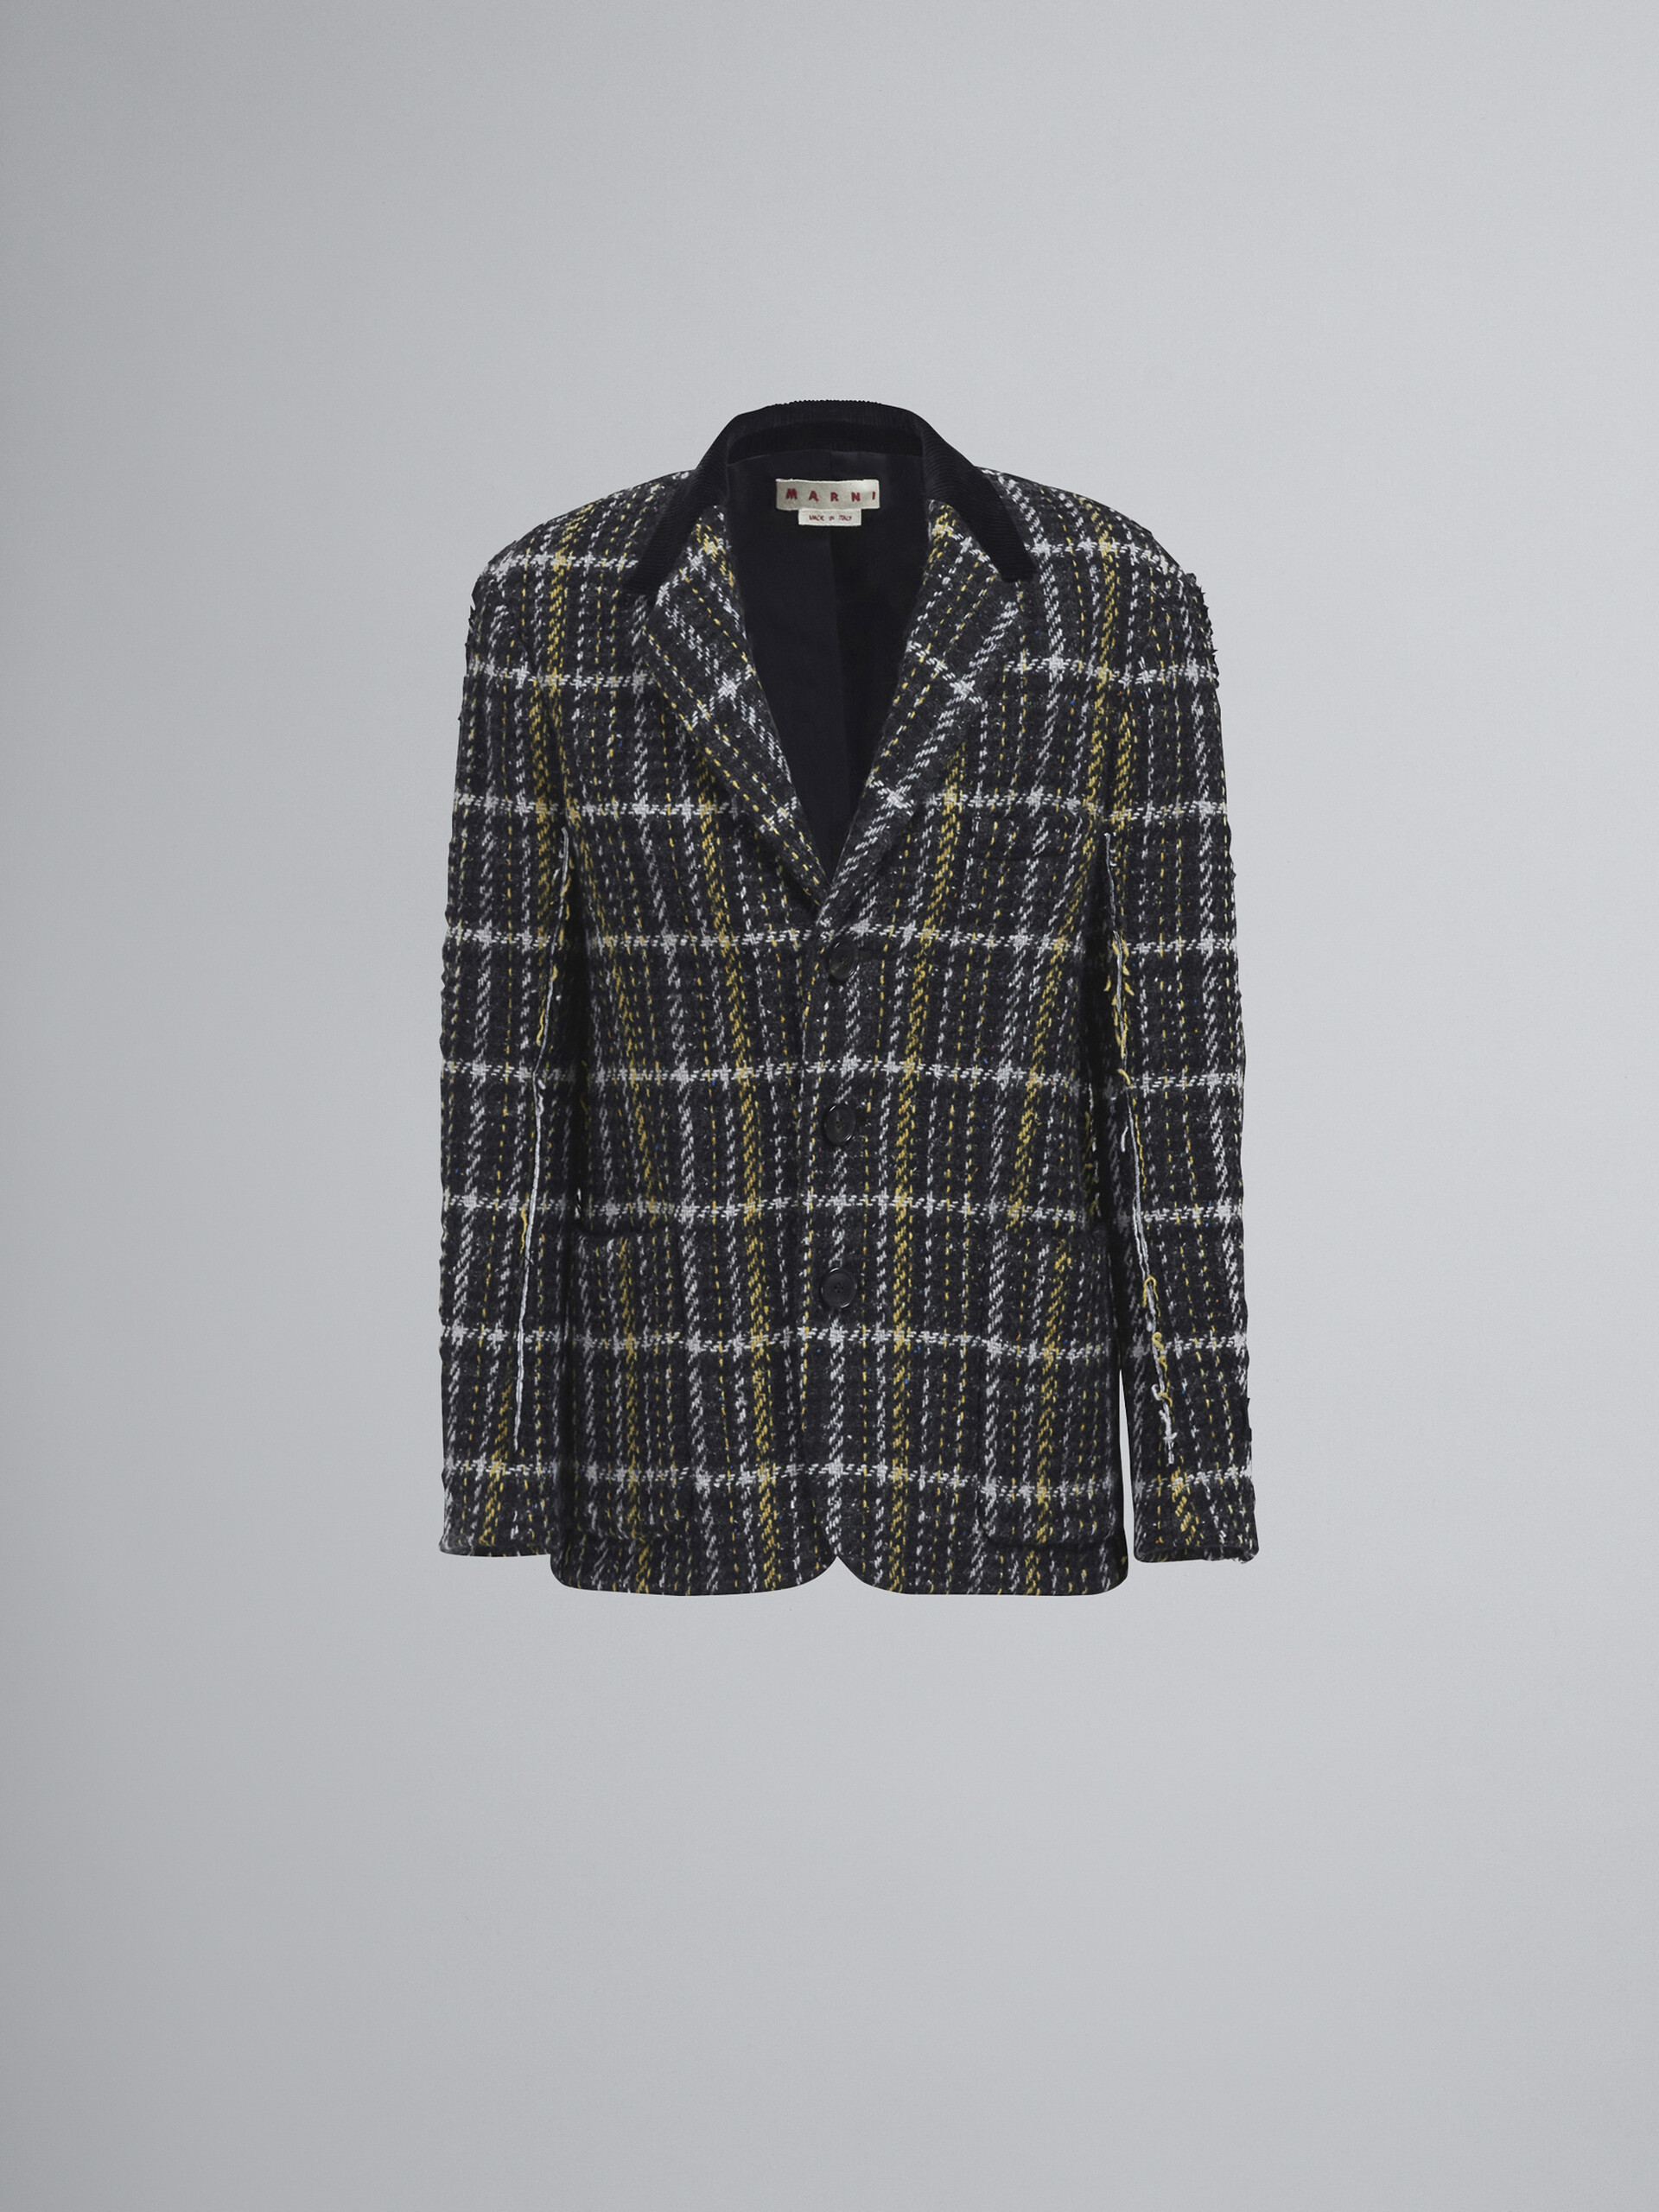 Speckled tweed blazer - Jackets - Image 1